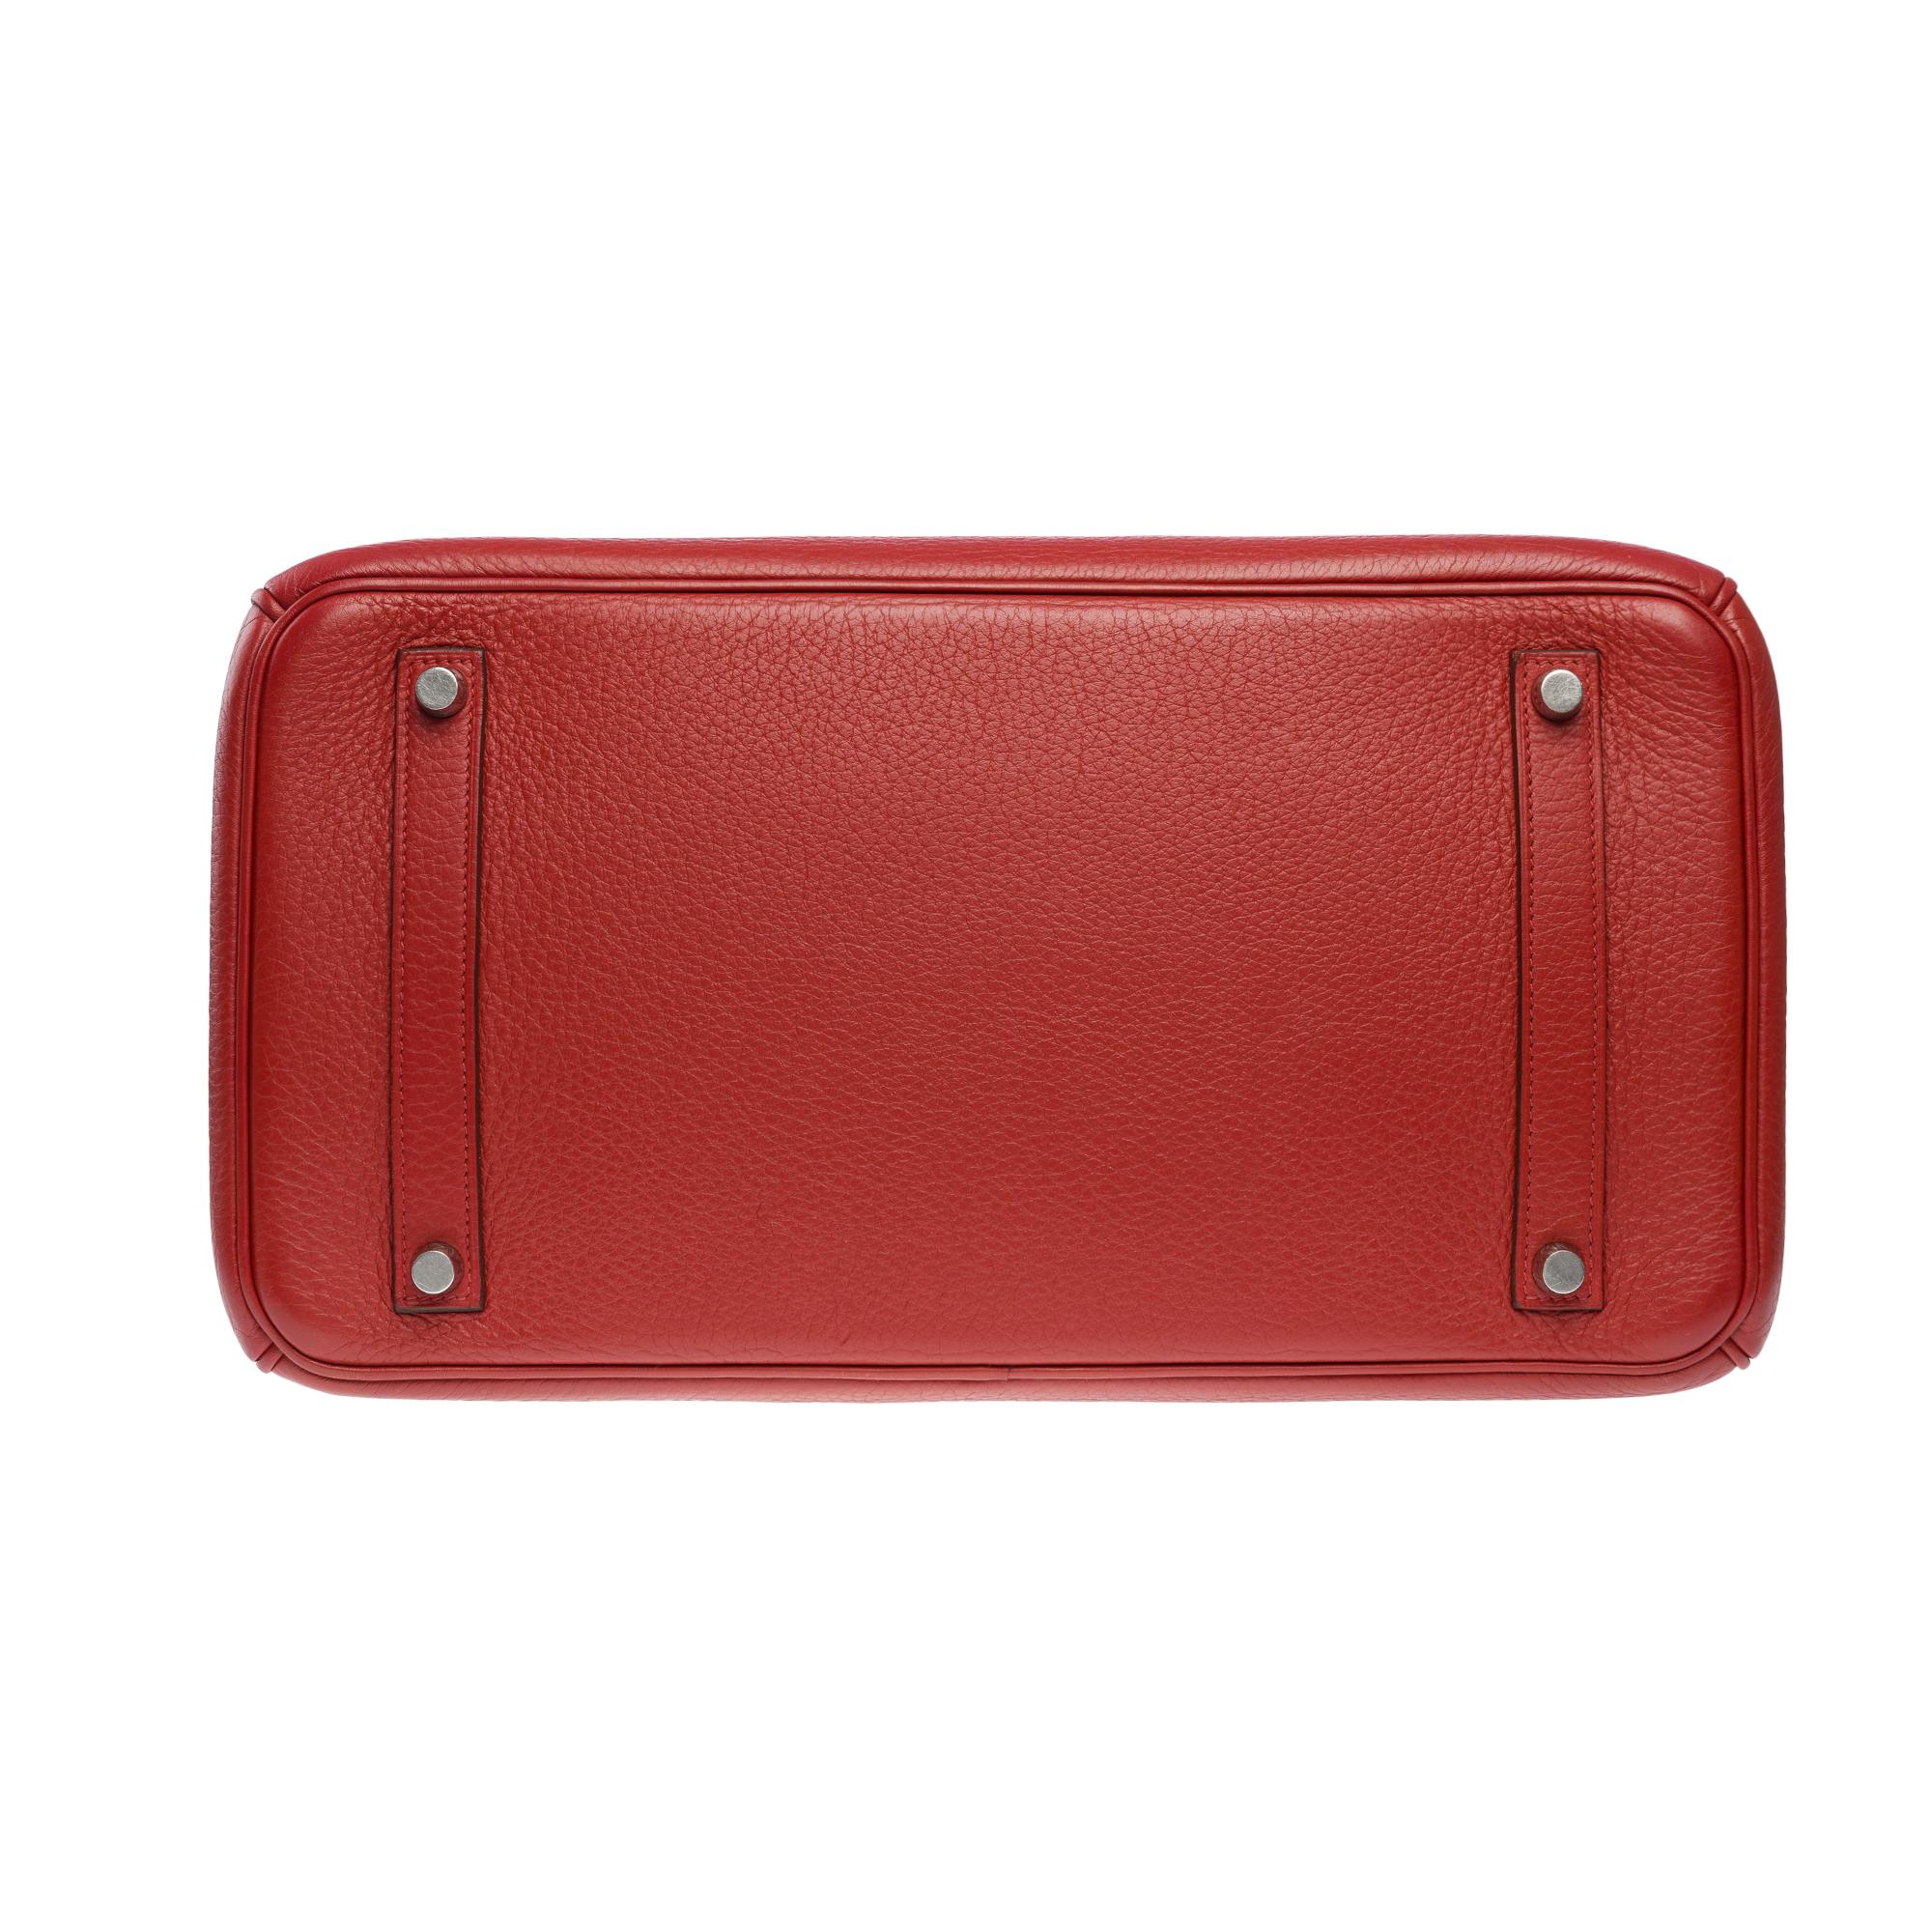 Stunning Hermès Birkin 35 handbag in Sienne Togo leather, SHW For Sale 8